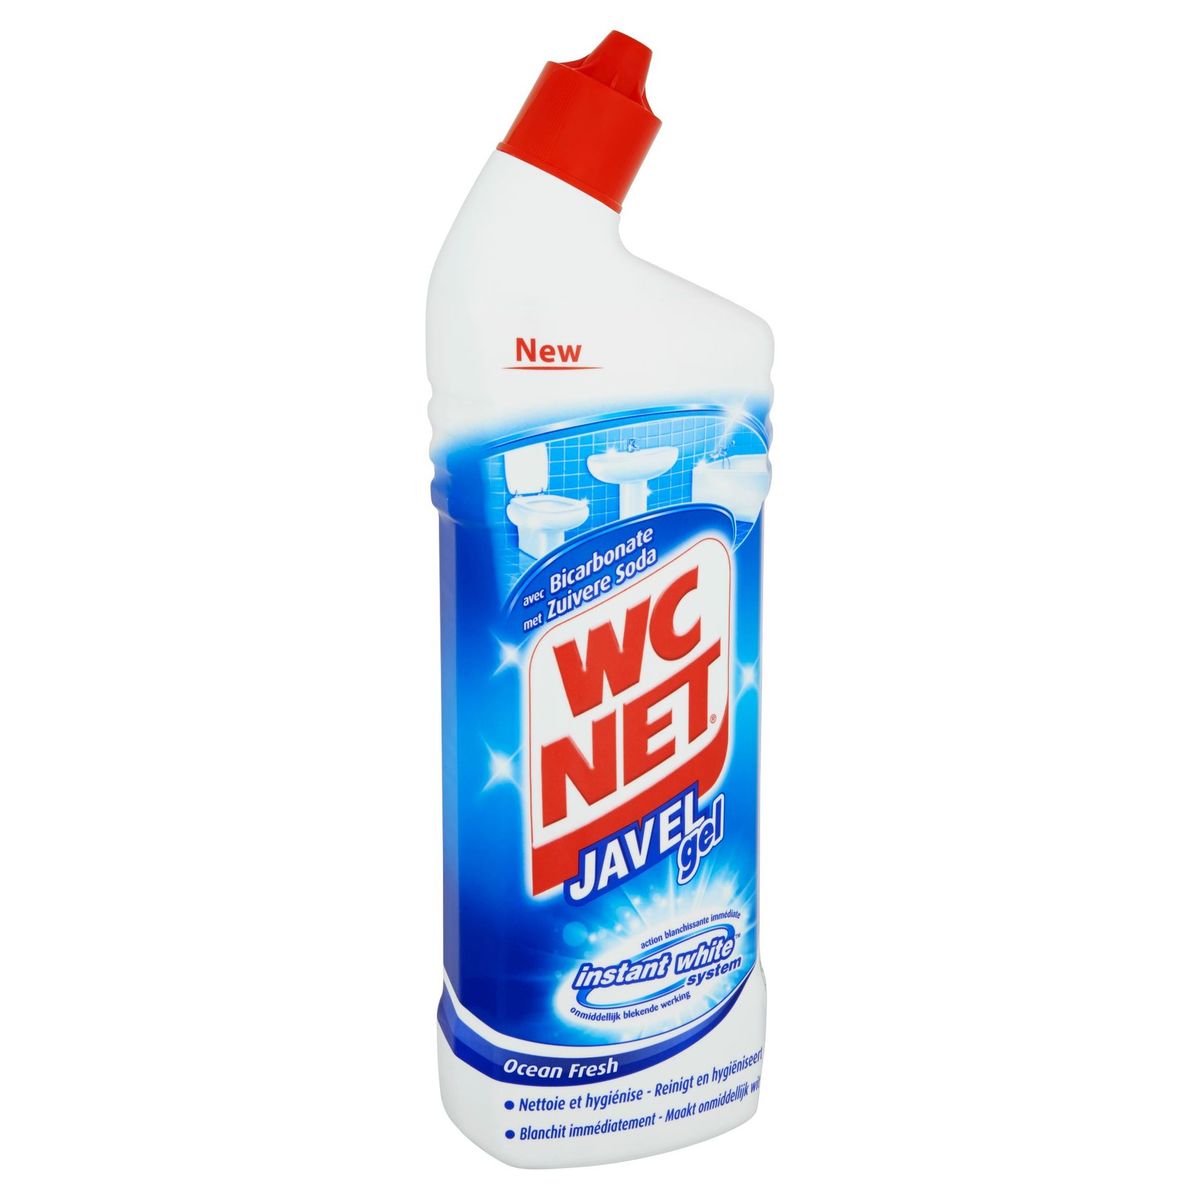 WC Net Javel Gel met Zuivere Soda Instant White System Ocean Fresh 750 ml